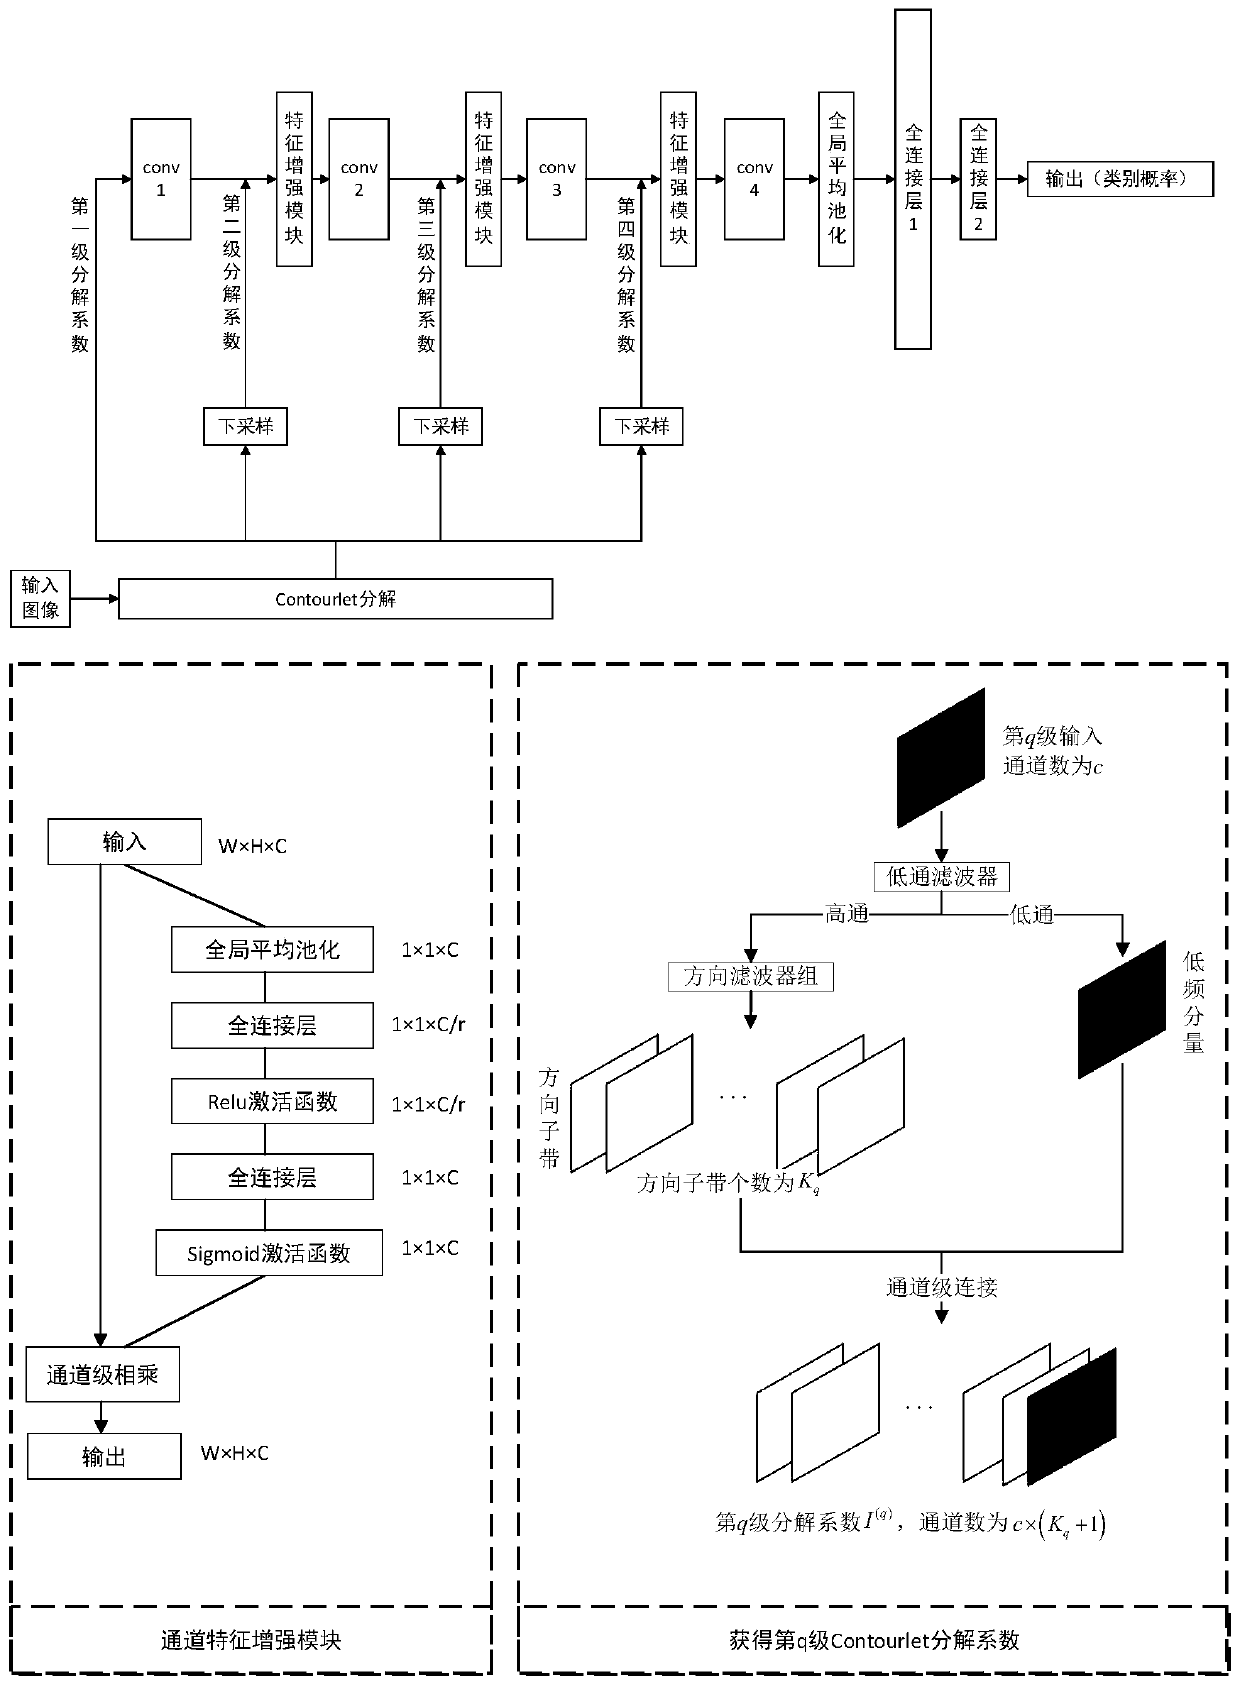 Remote sensing image classification method based on attention mechanism deep Contourlet network